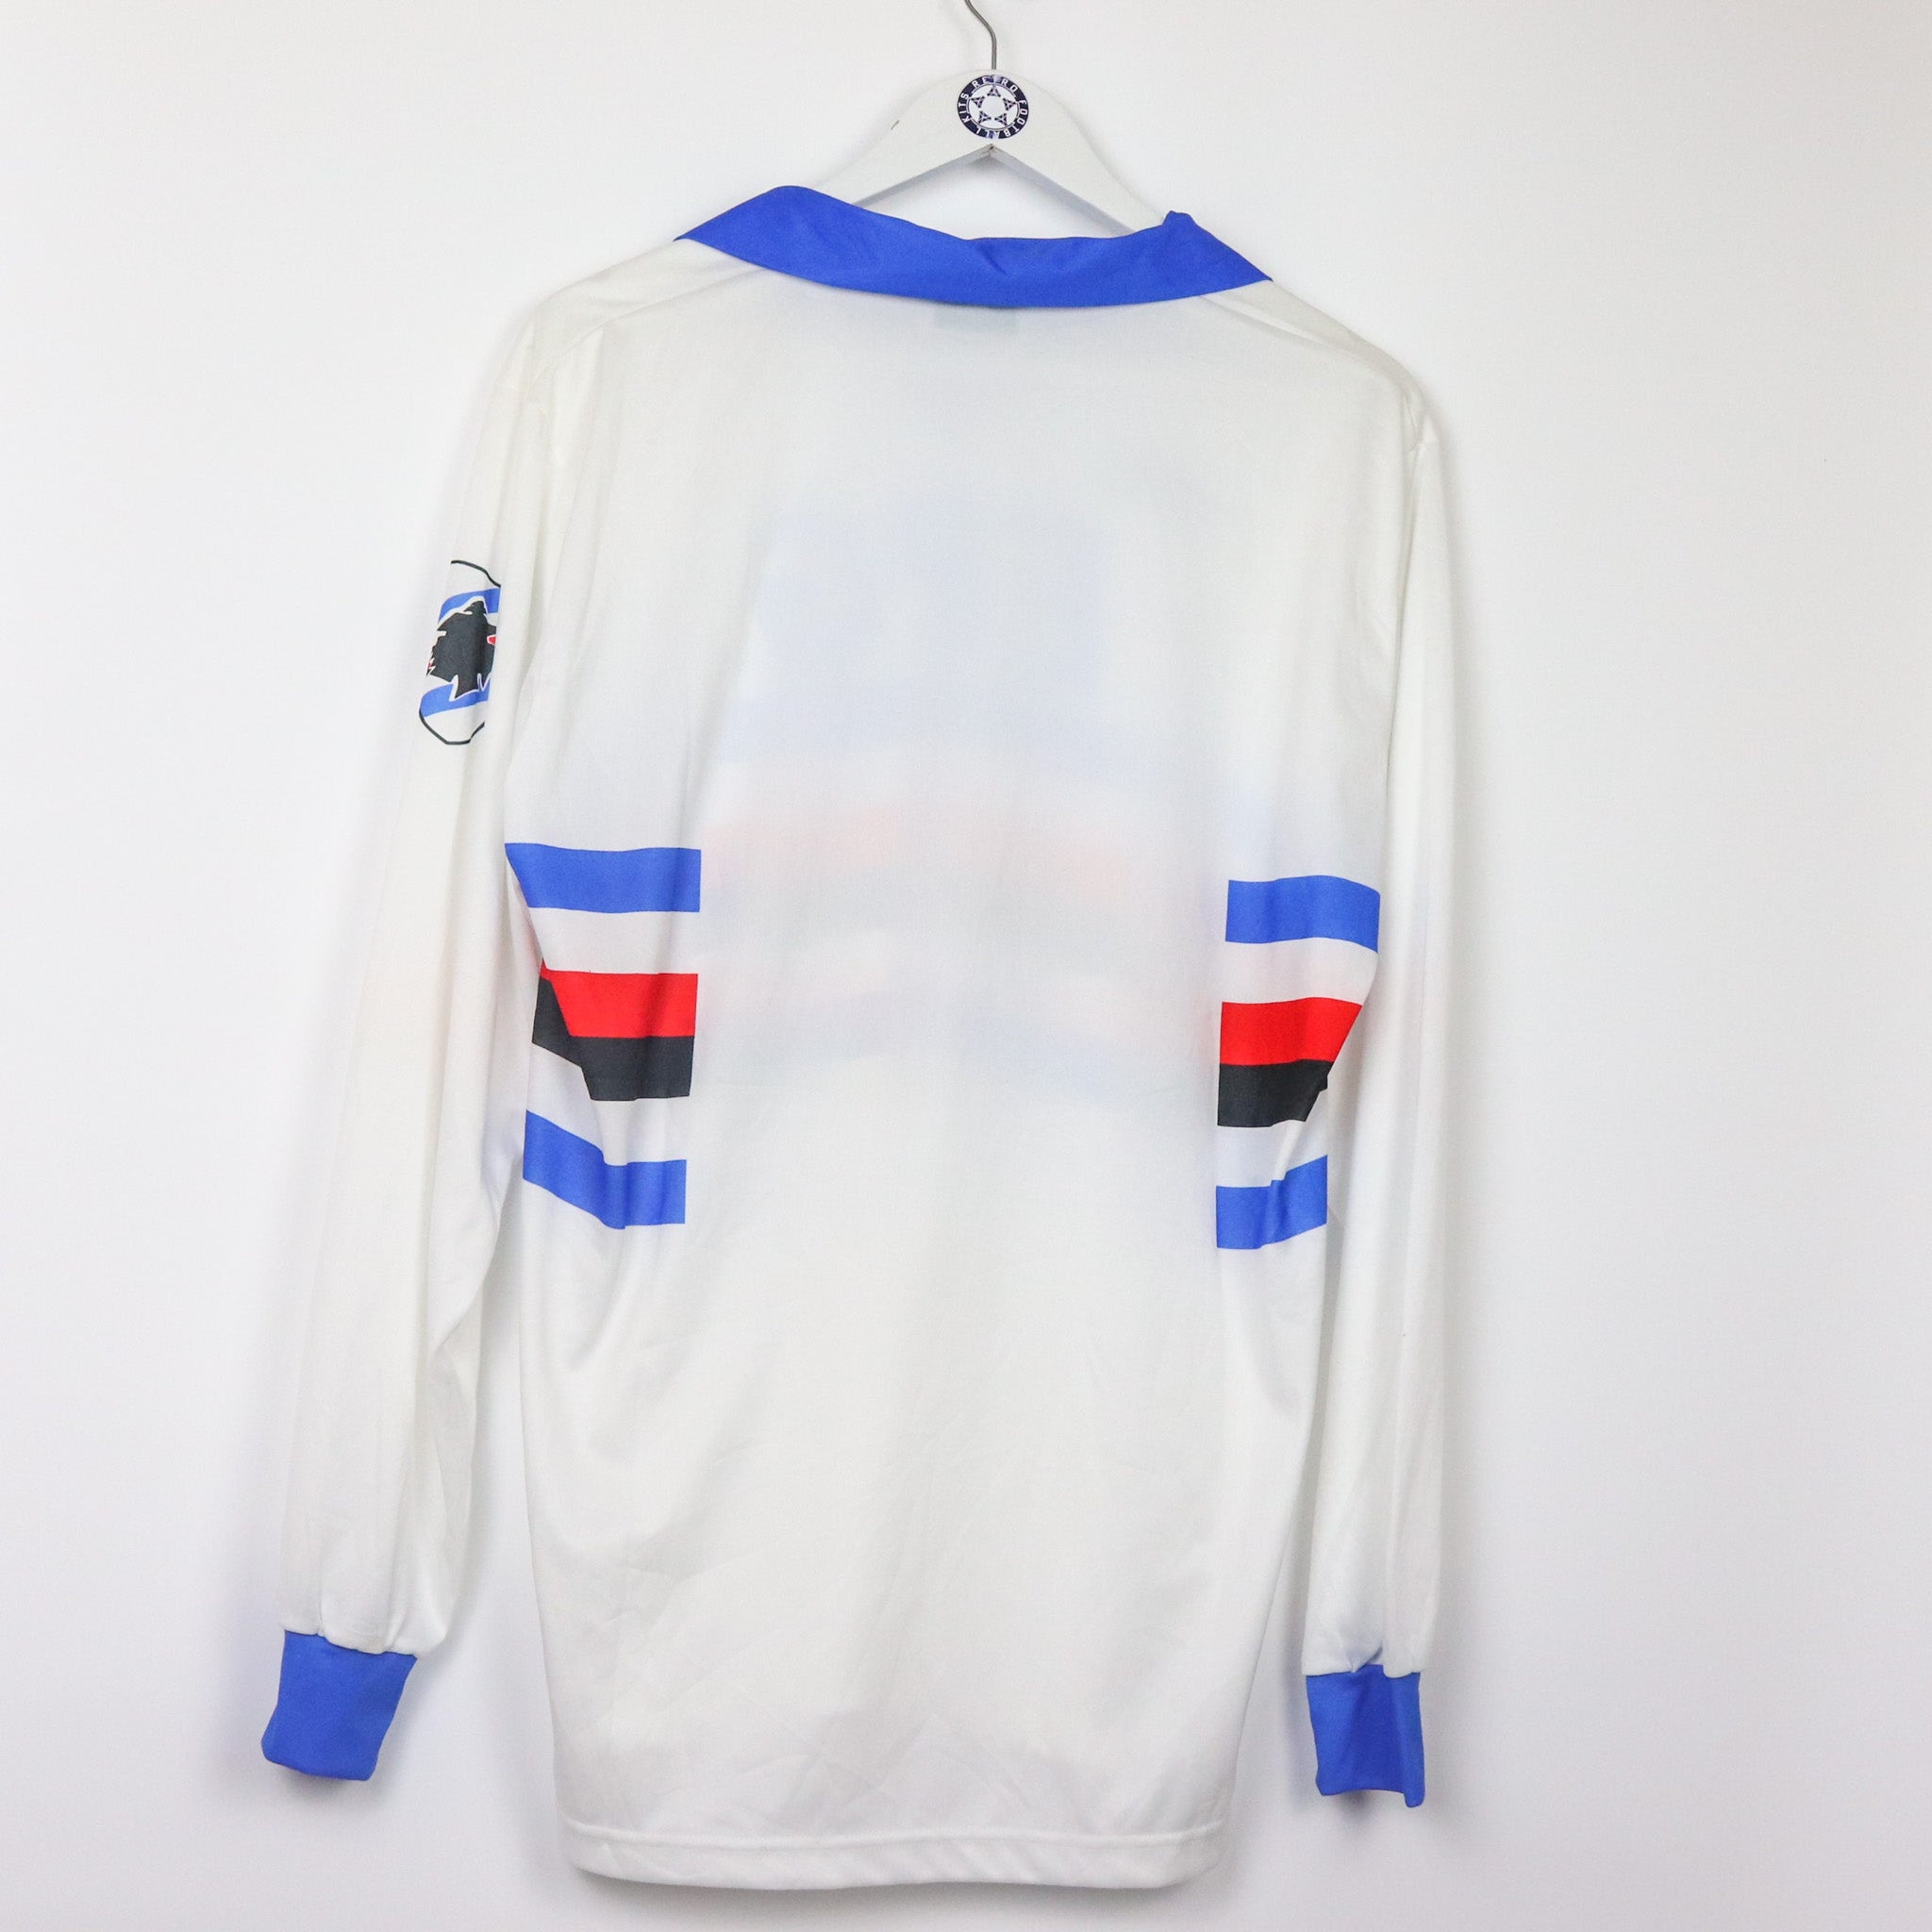 Sampdoria 1990/92 Kit: The Iconic Shirt That Accompanied Samp's